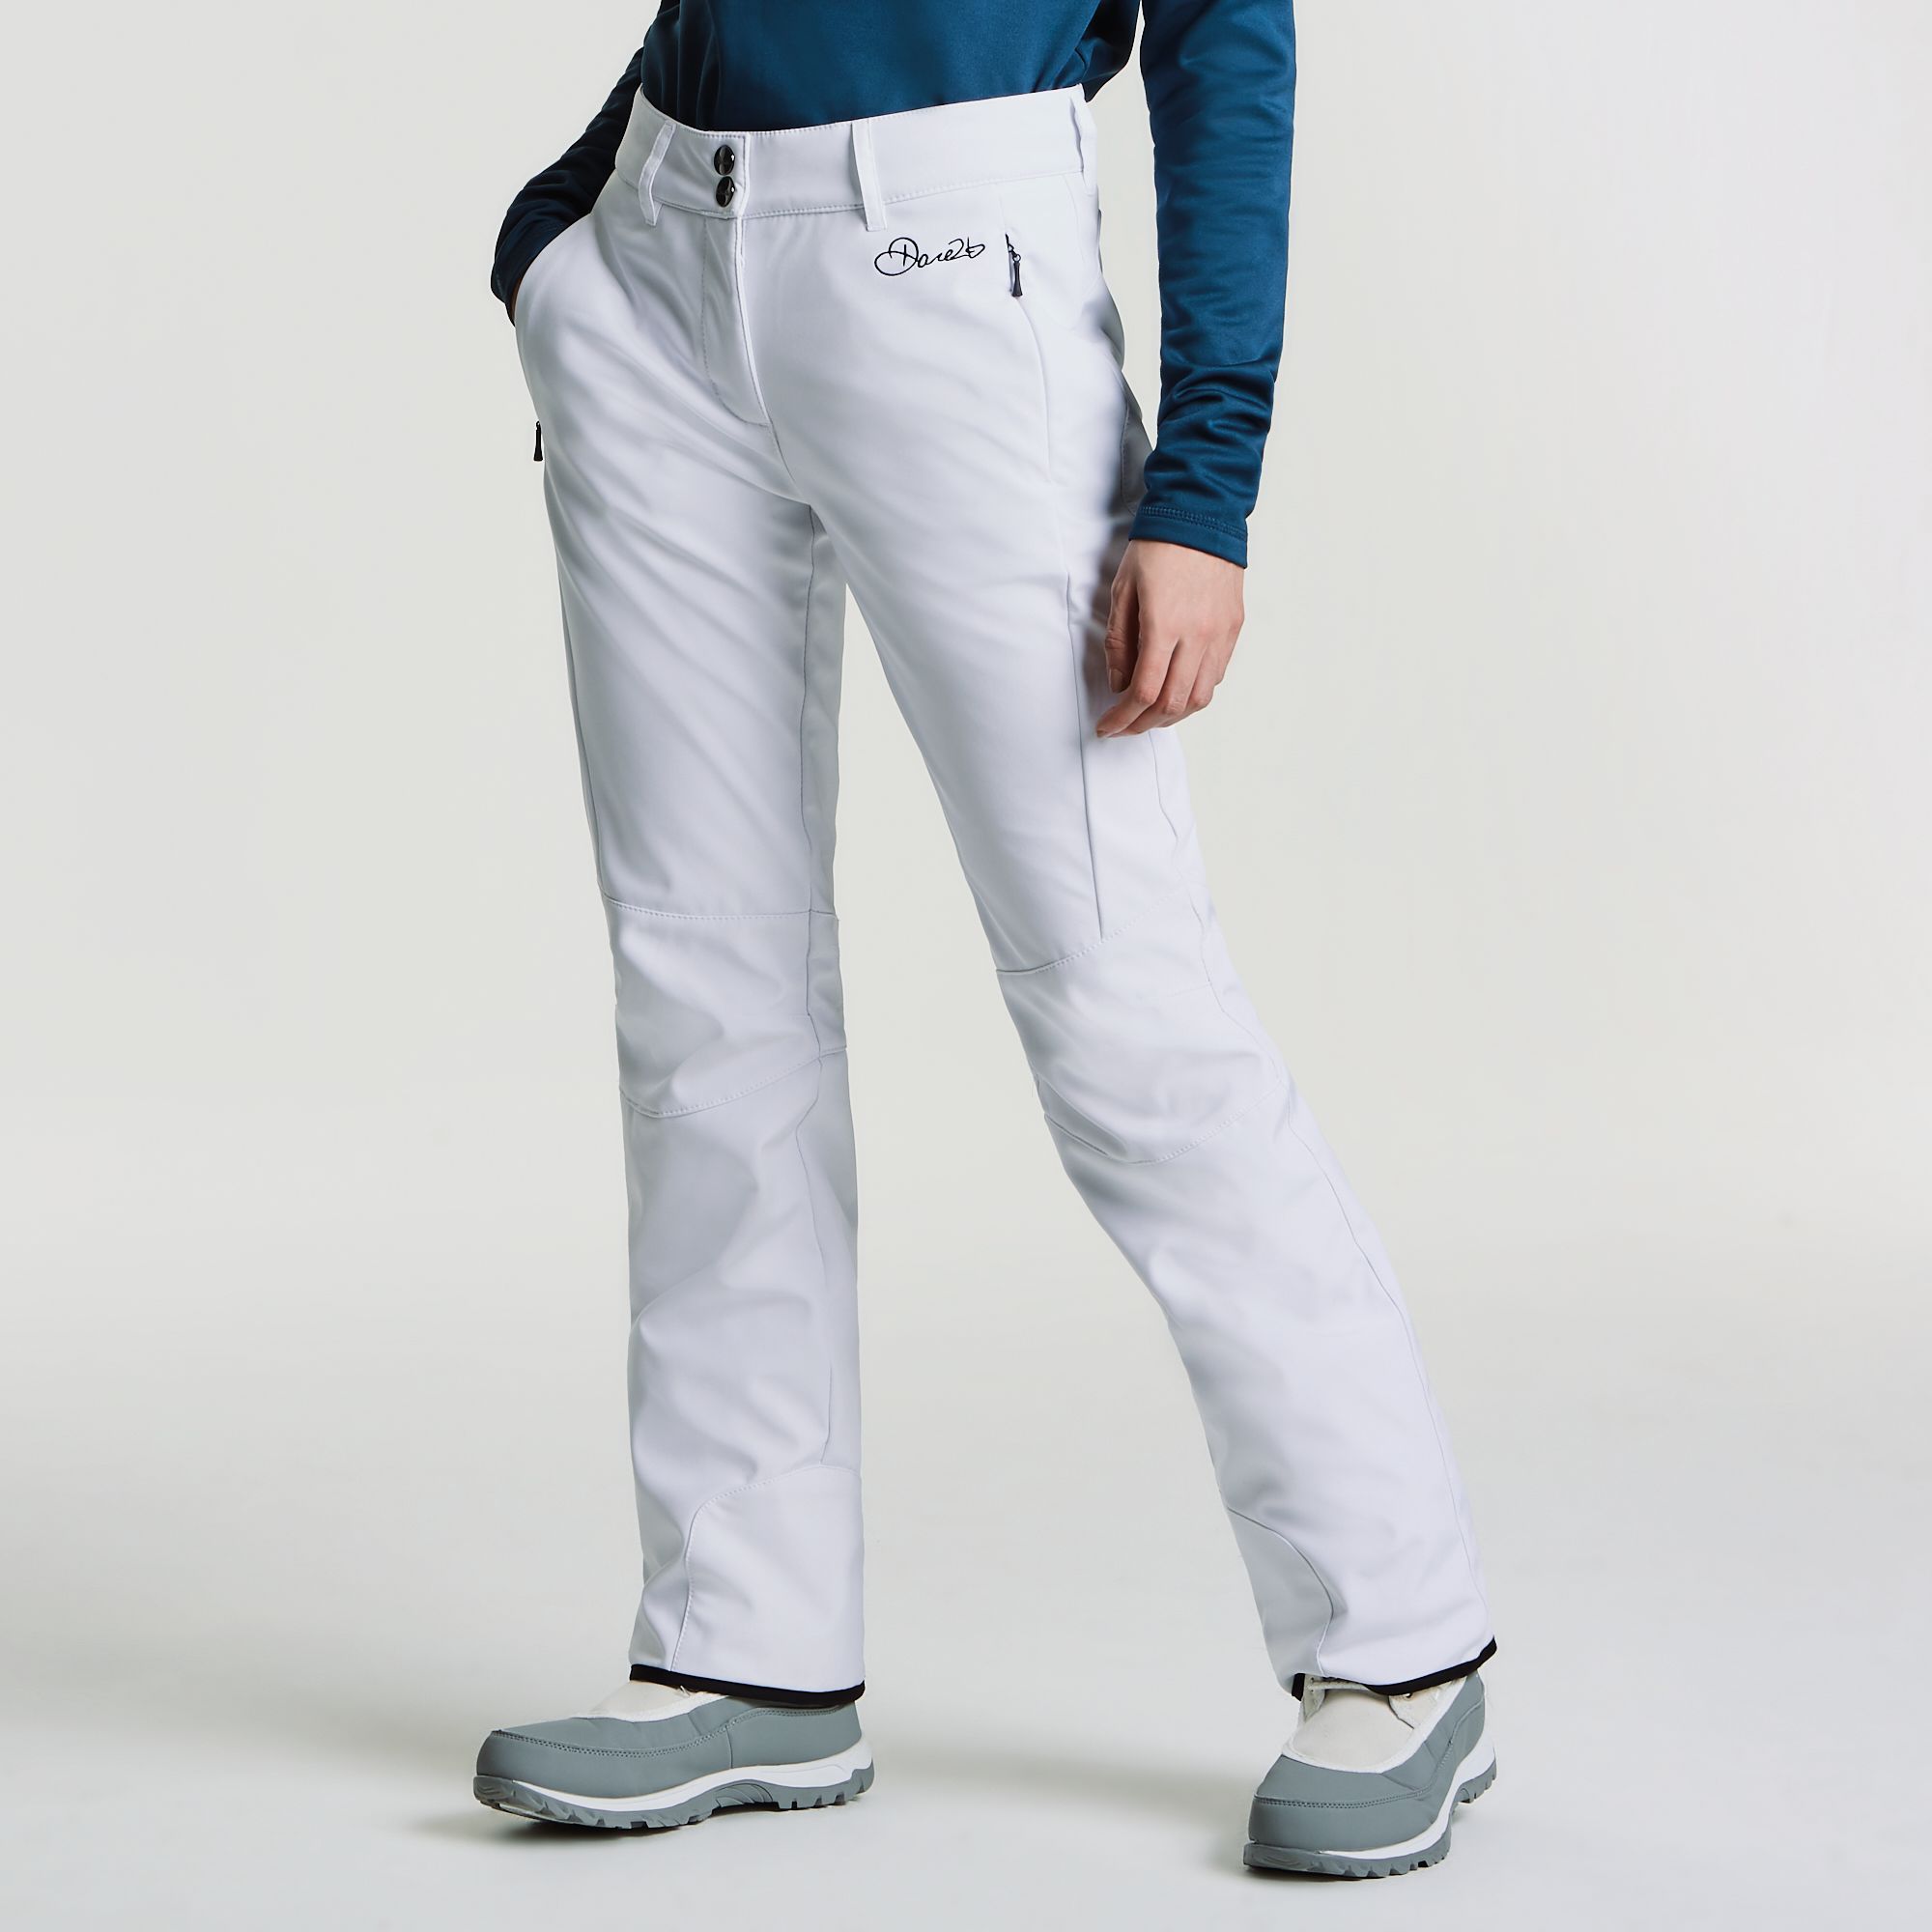 Women's Dare2b Rarity Luxe Softshell Ski Pants White RRP £100 Size 12-14 -  Ski Market